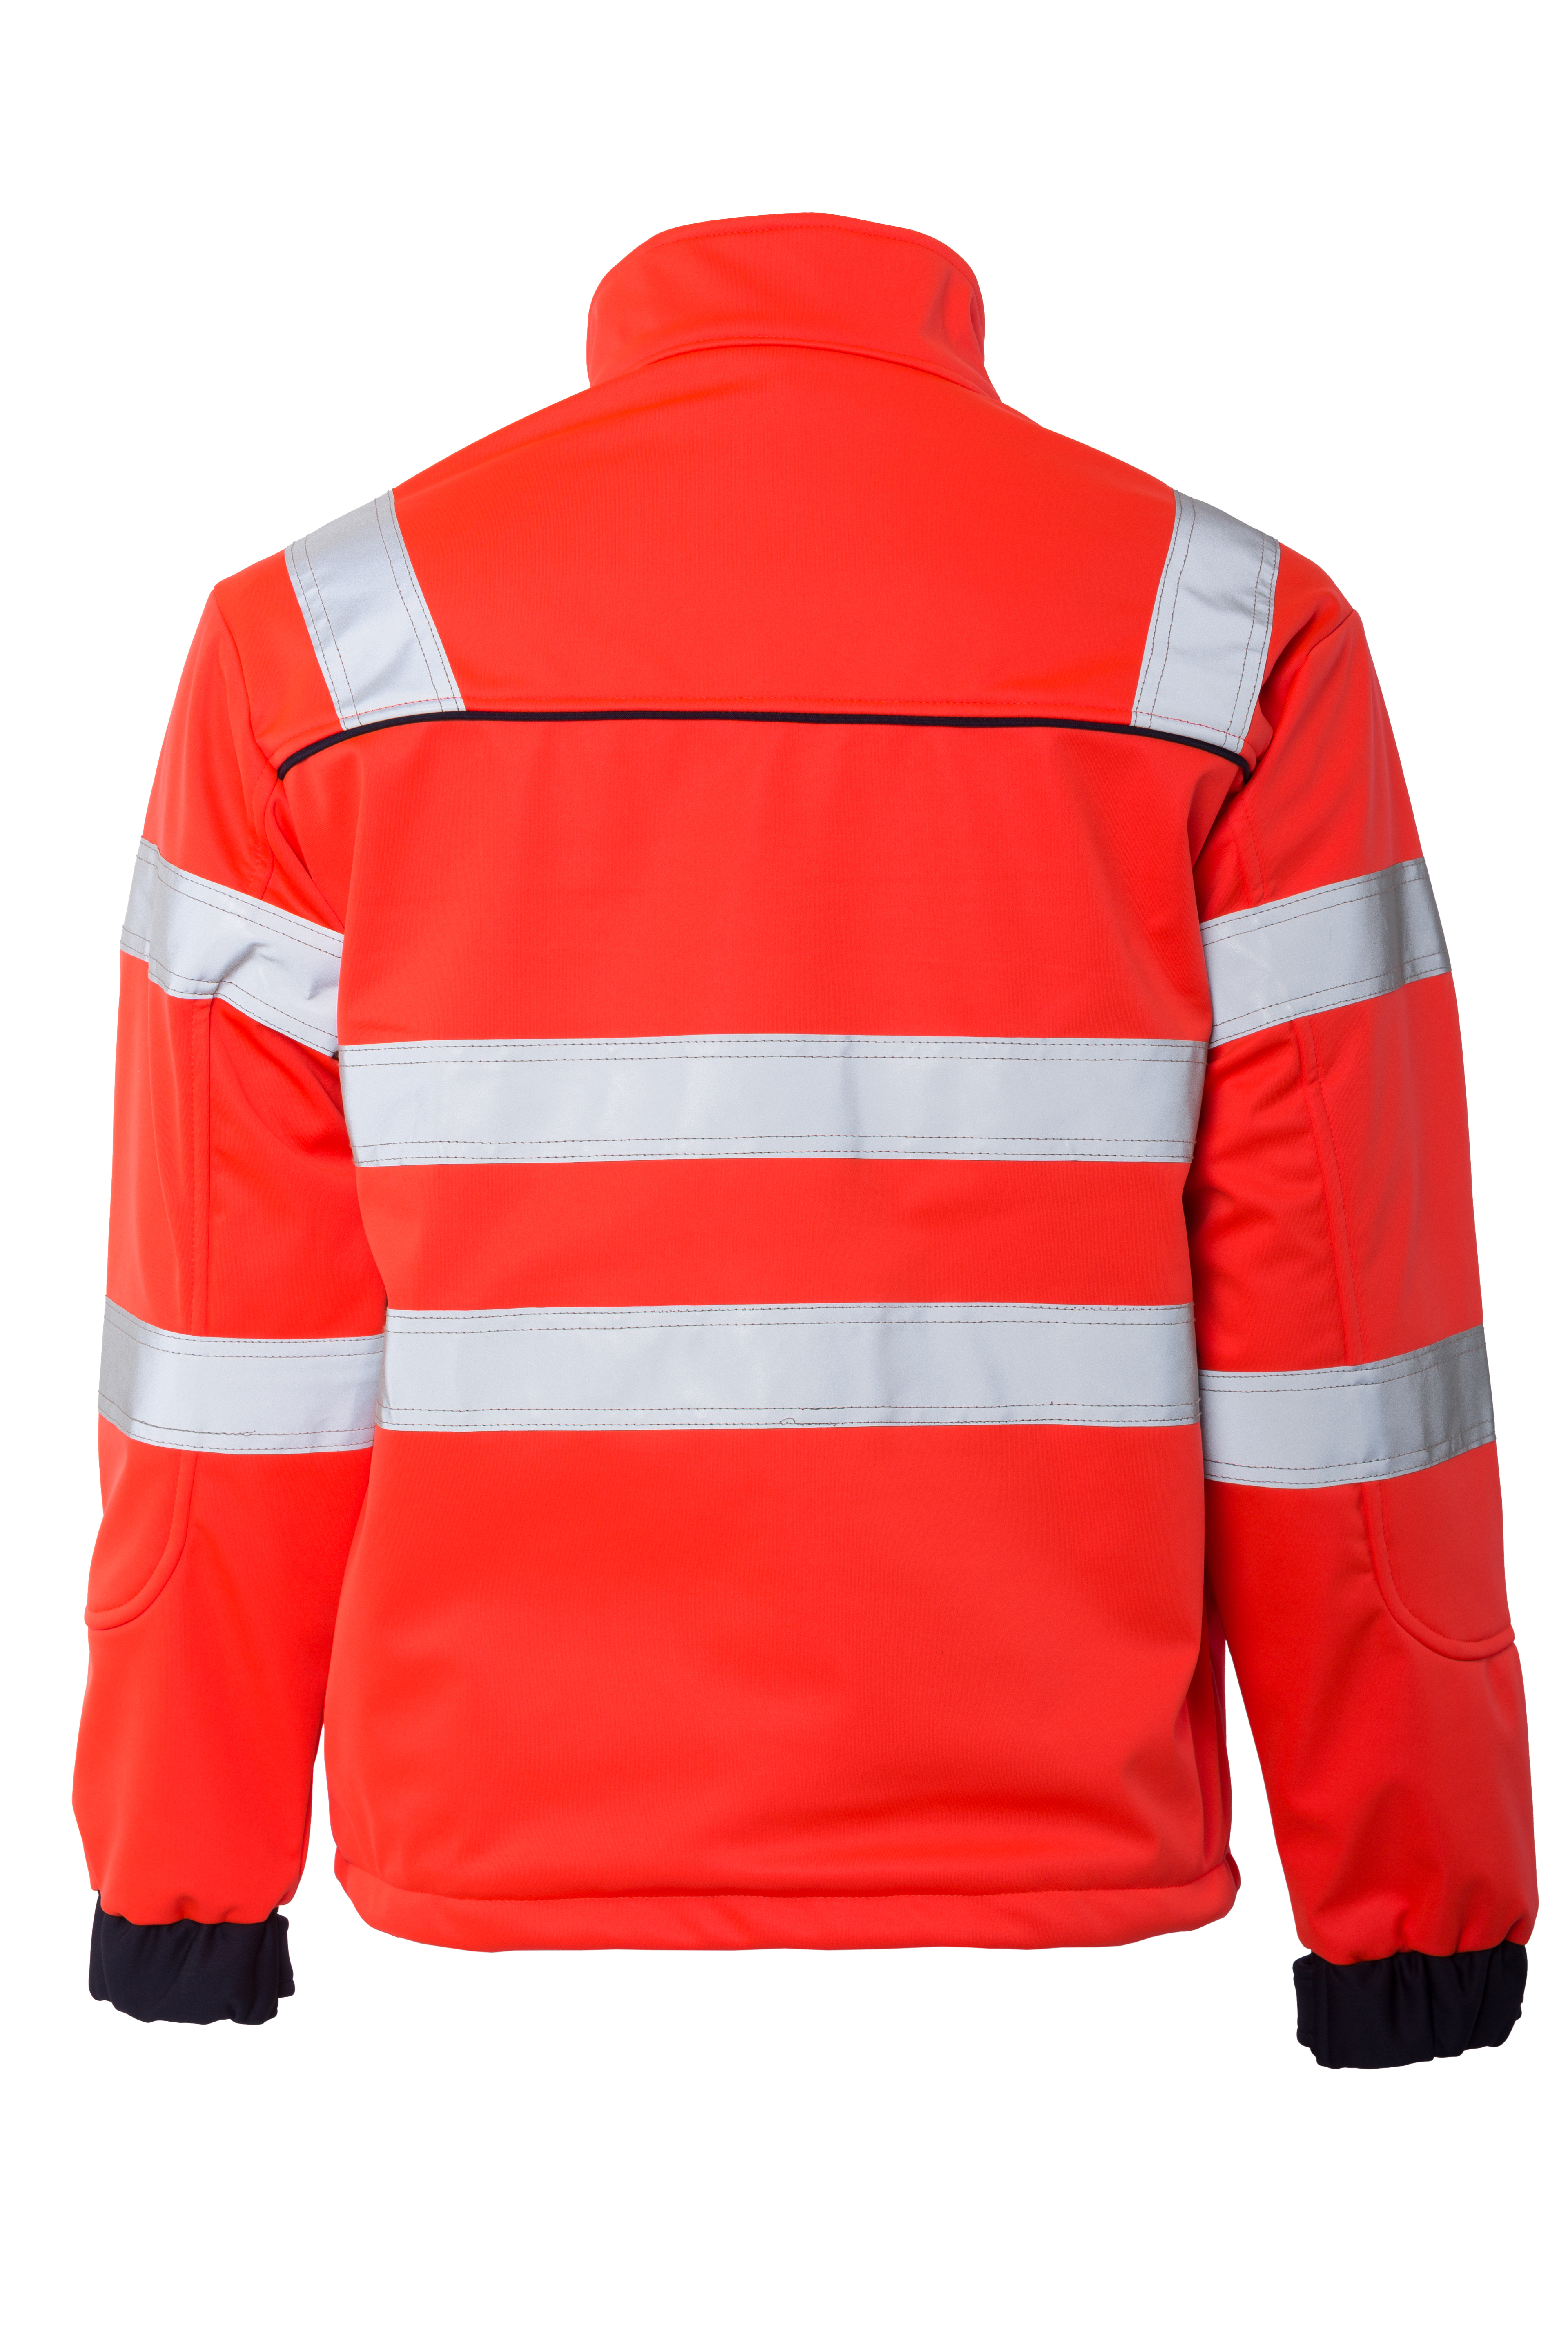 Rescuewear Softshelljacke Dynamic HiVis Klasse 3 Marineblau / Neon Rot `W-Linie`  - 2XL